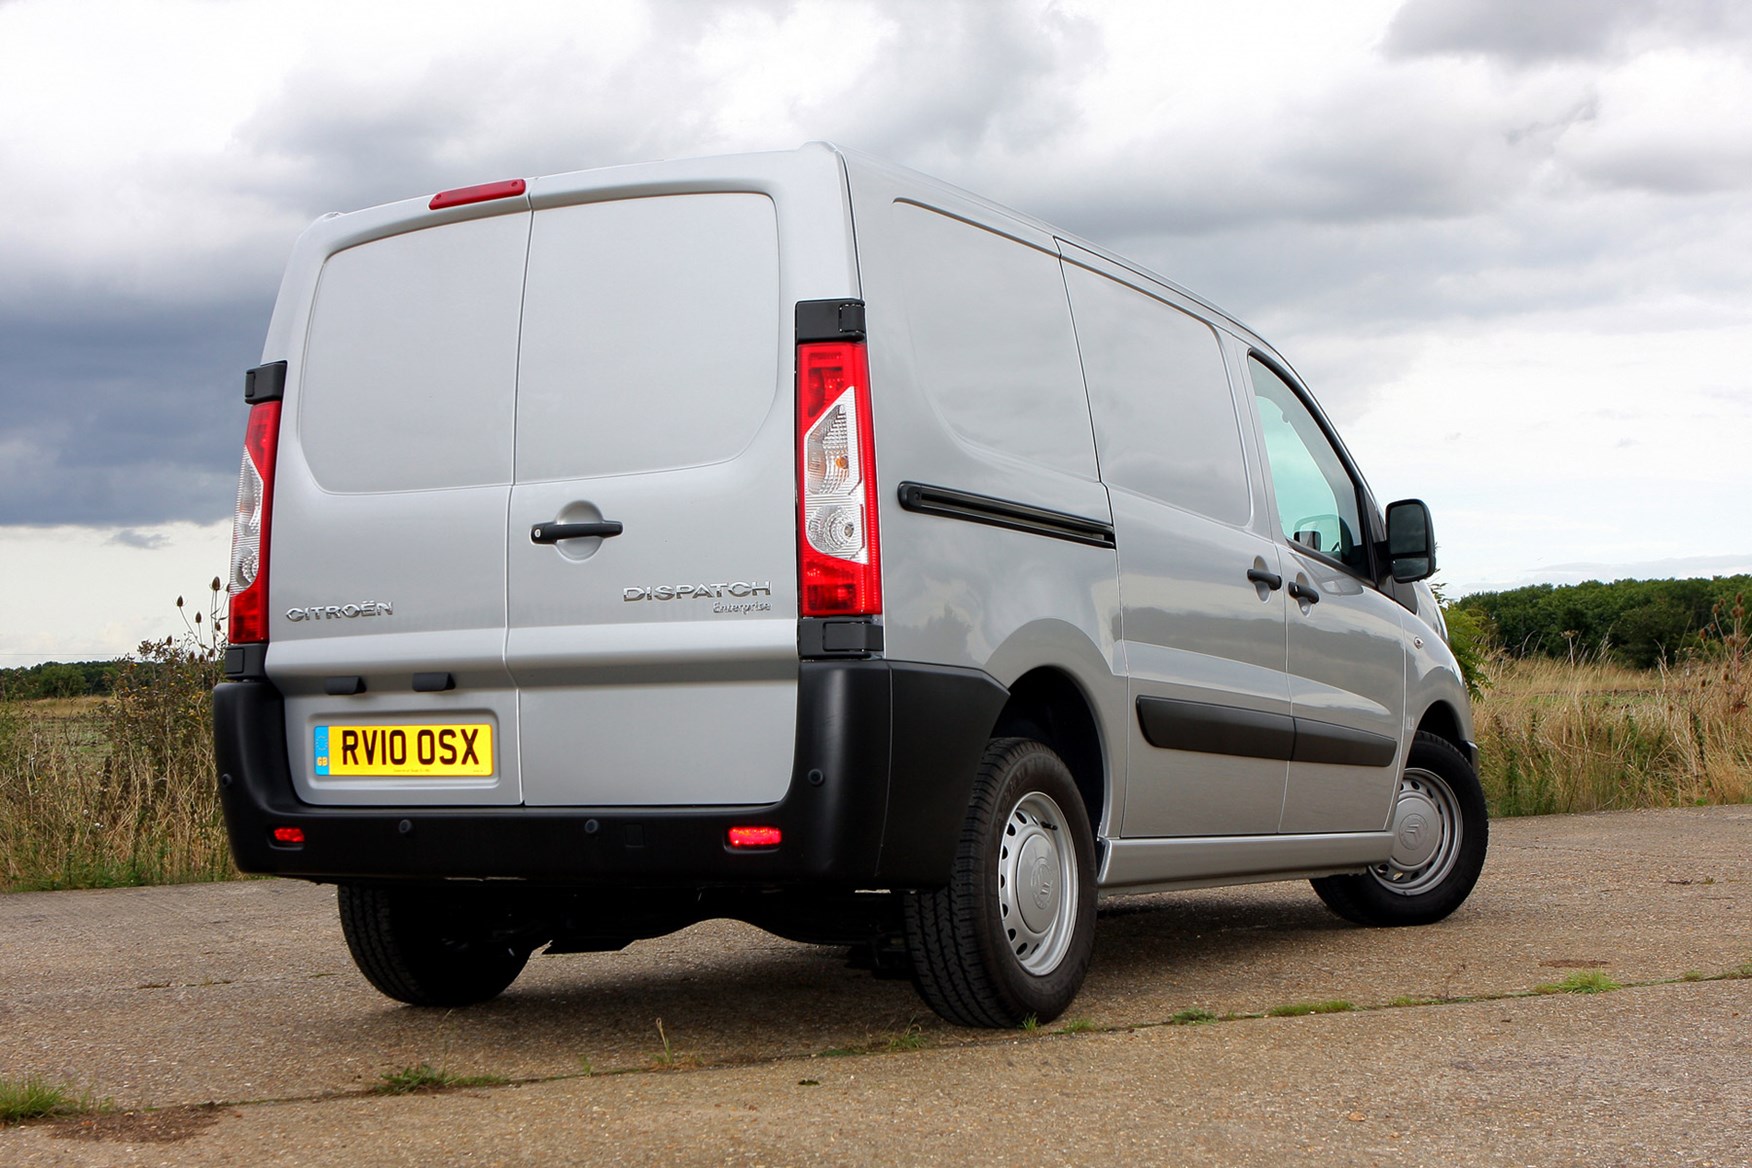 Citroen Dispatch full review on Parkers Vans - rear